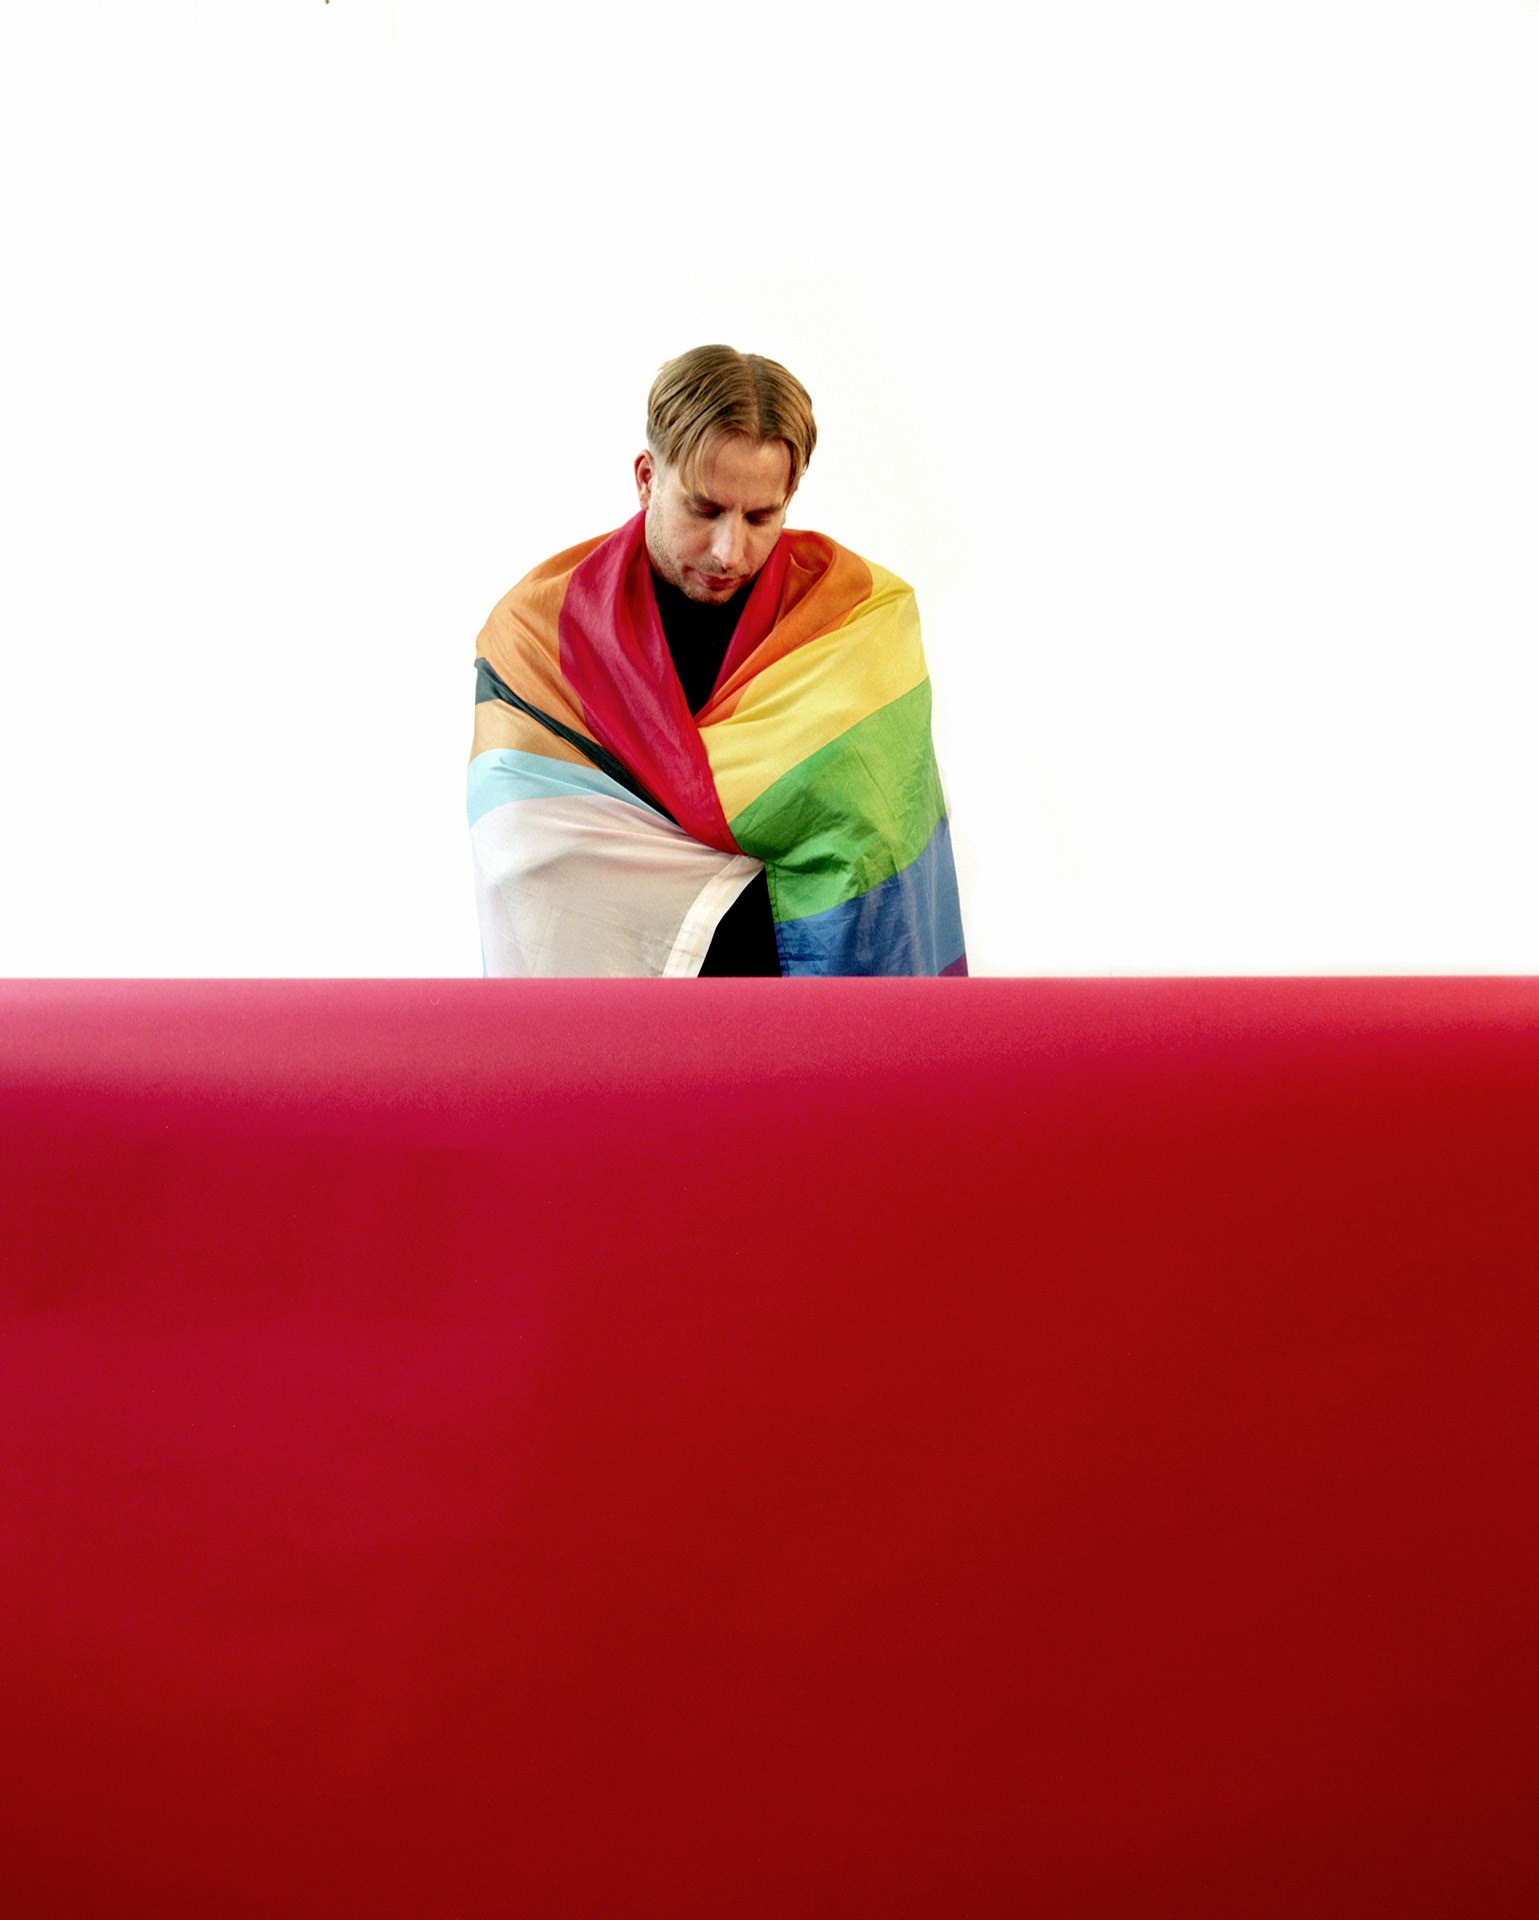 Kuba Ryniewicz photographer Polish LGBTQ+ Jarek Kubiak